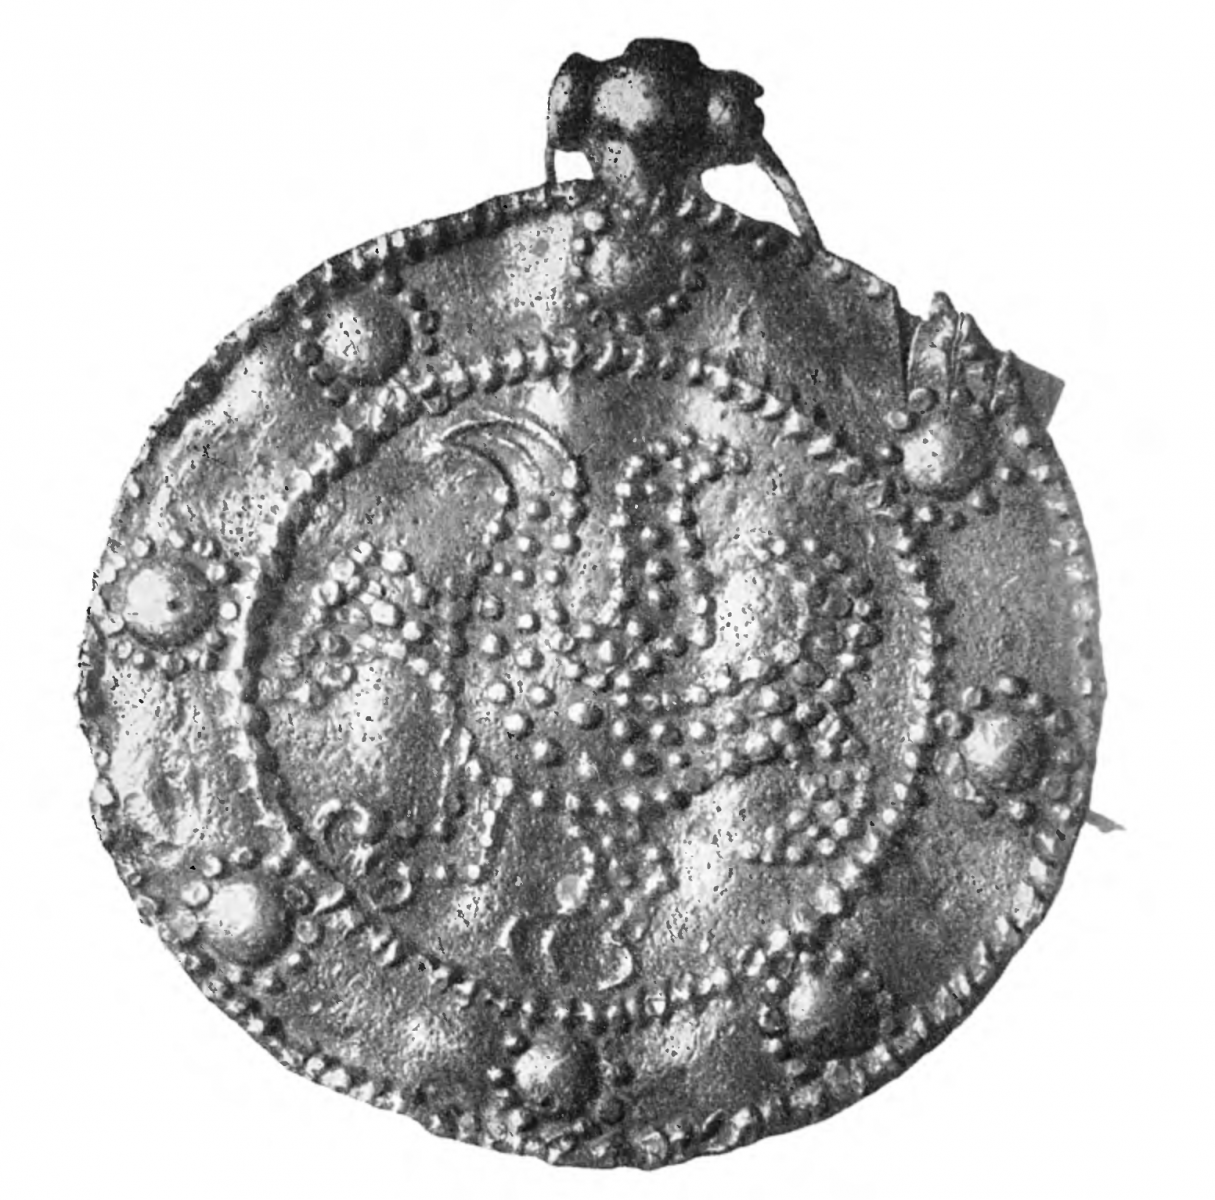 Illustration 01: Silver Medallion, 14th century